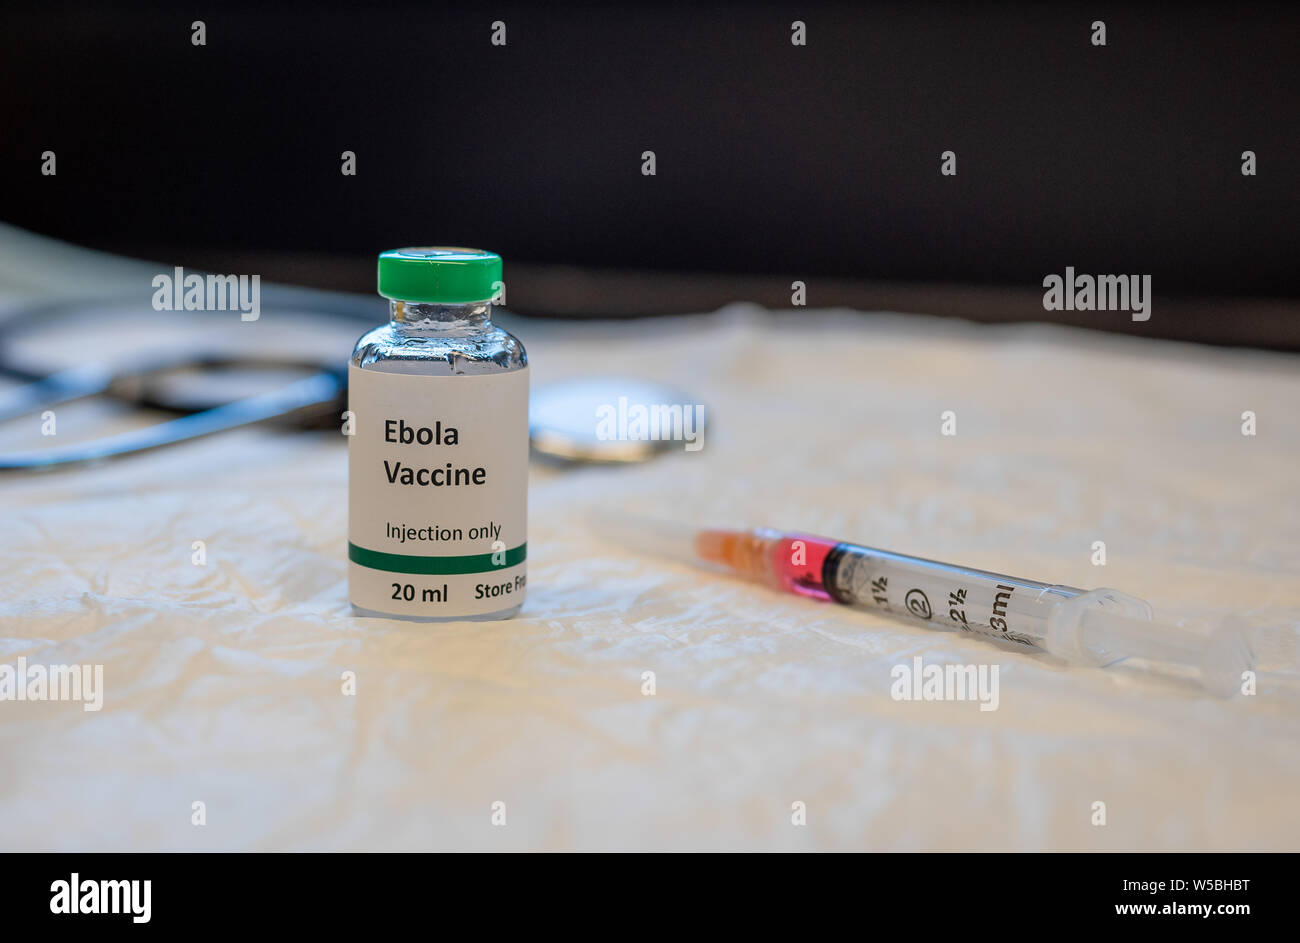 Illustrative Ebola vaccine vial with stethoscope and syringe Stock Photo